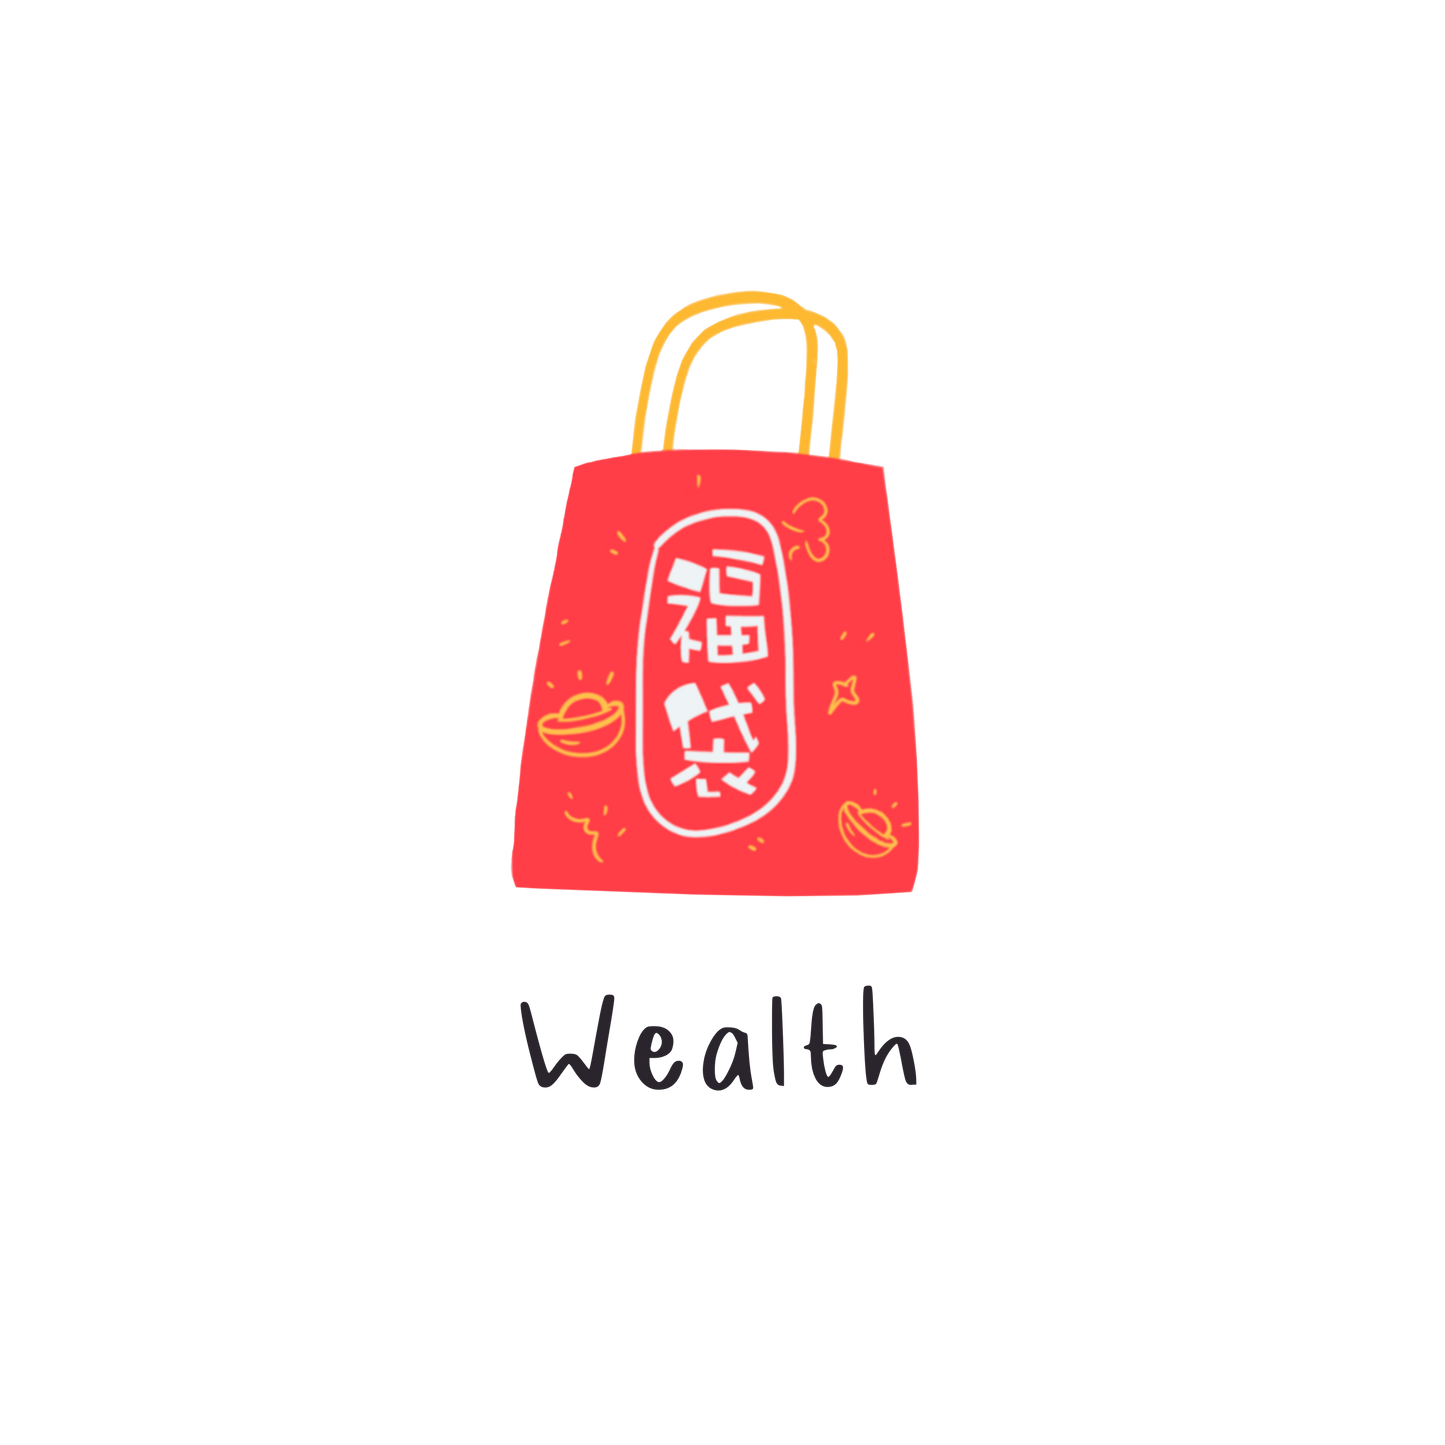 Wealth Fukubukuro